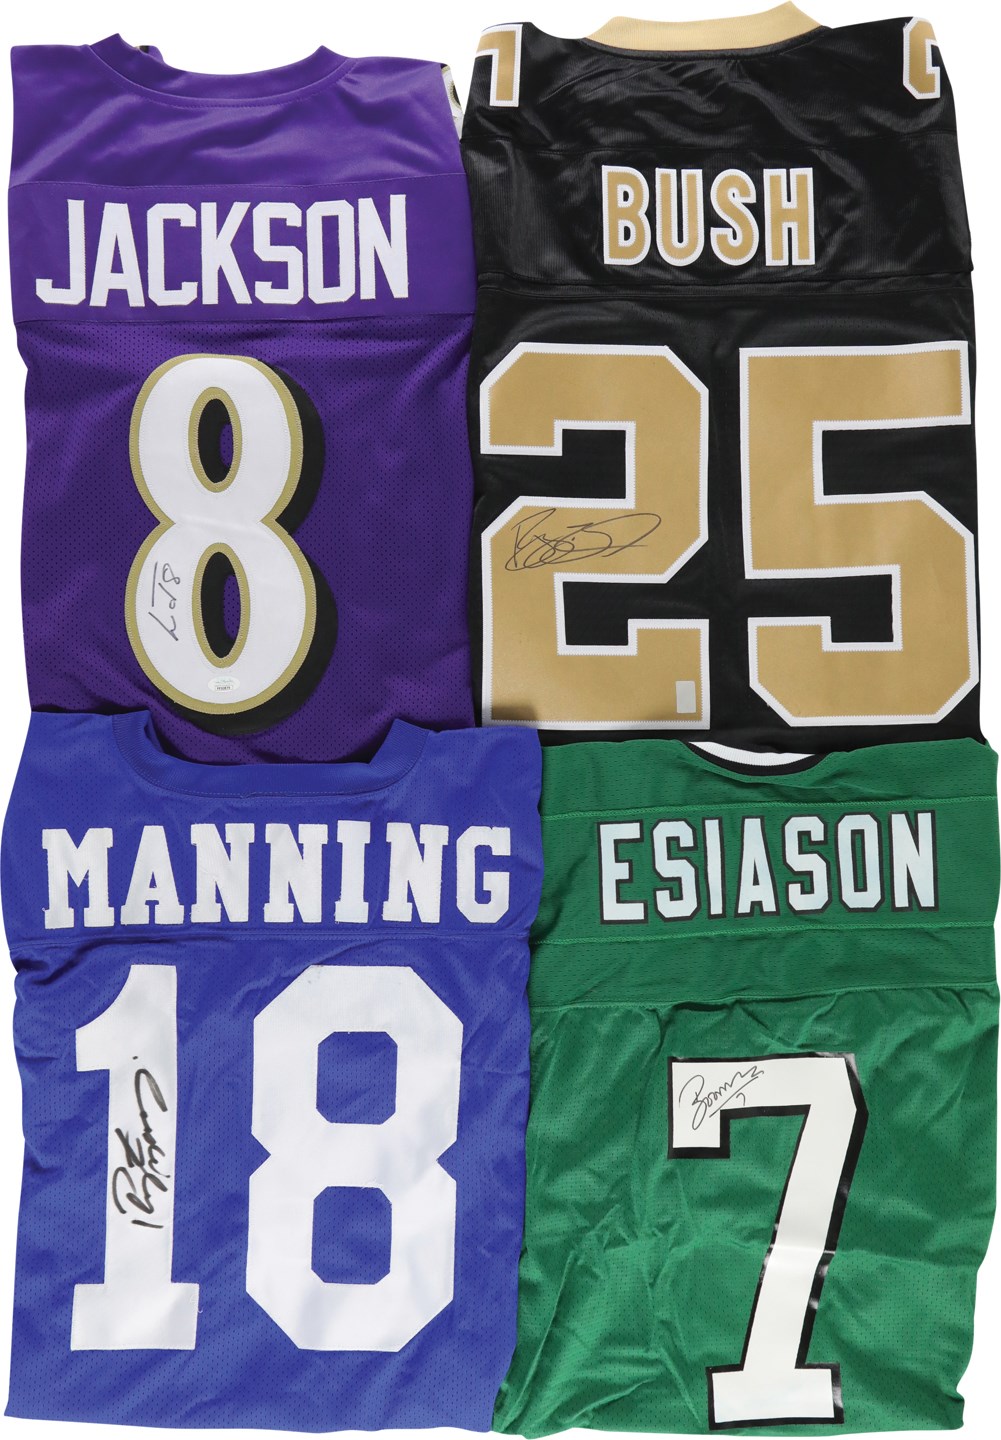 - Signed Football Jersey Collection (4): P. Manning, L. Jackson, R. Bush, & B. Esiason